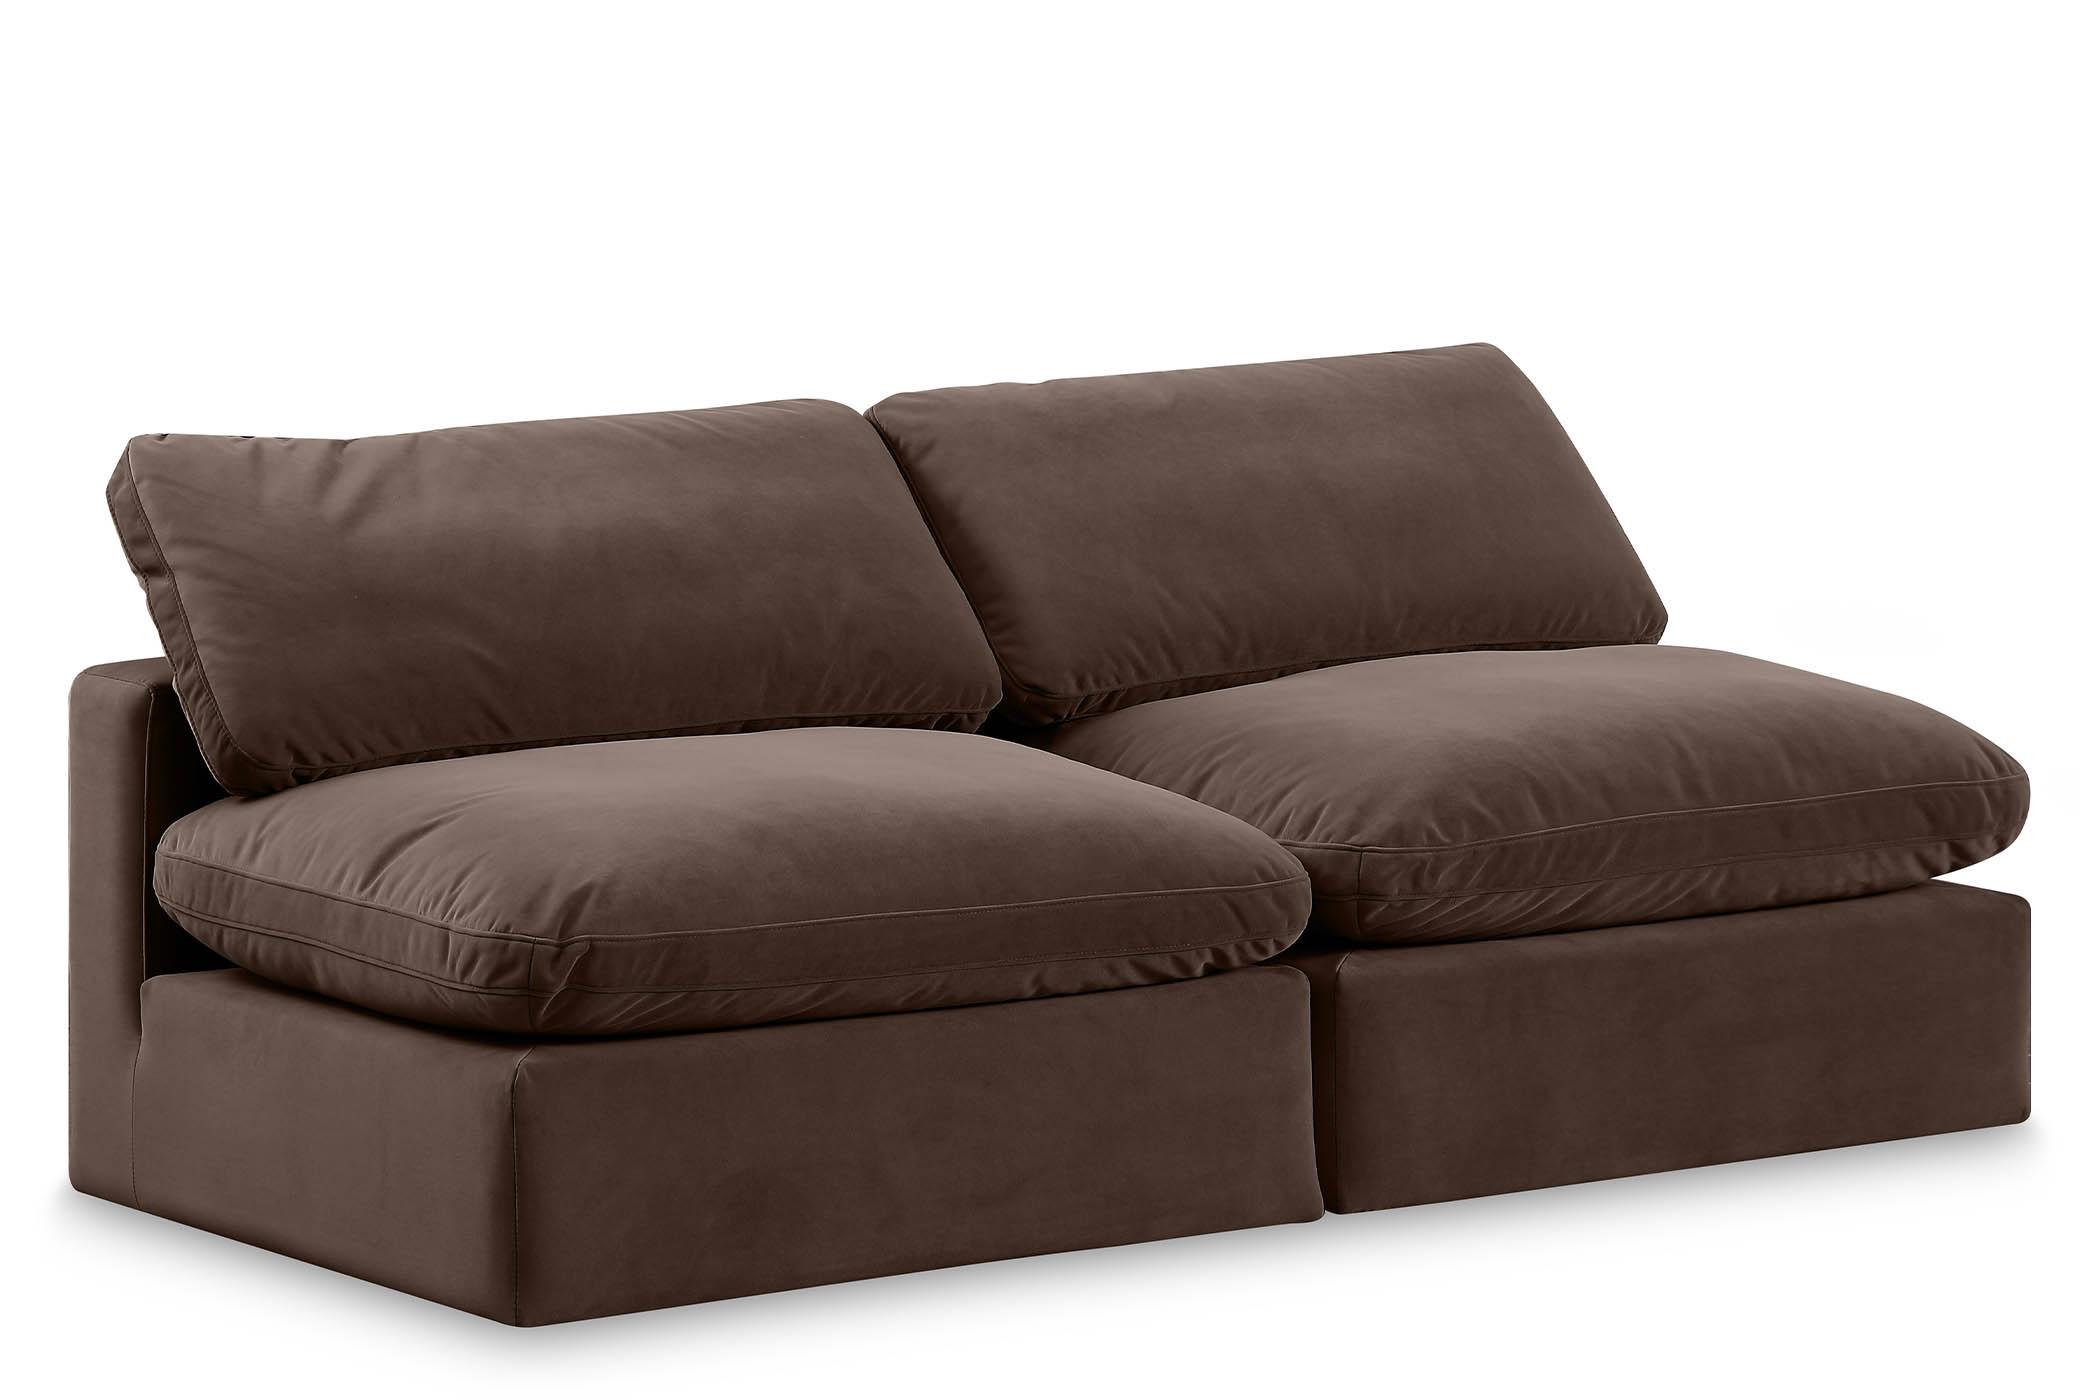 Contemporary, Modern Modular Sofa 189Brown-S78 189Brown-S78 in Brown Velvet